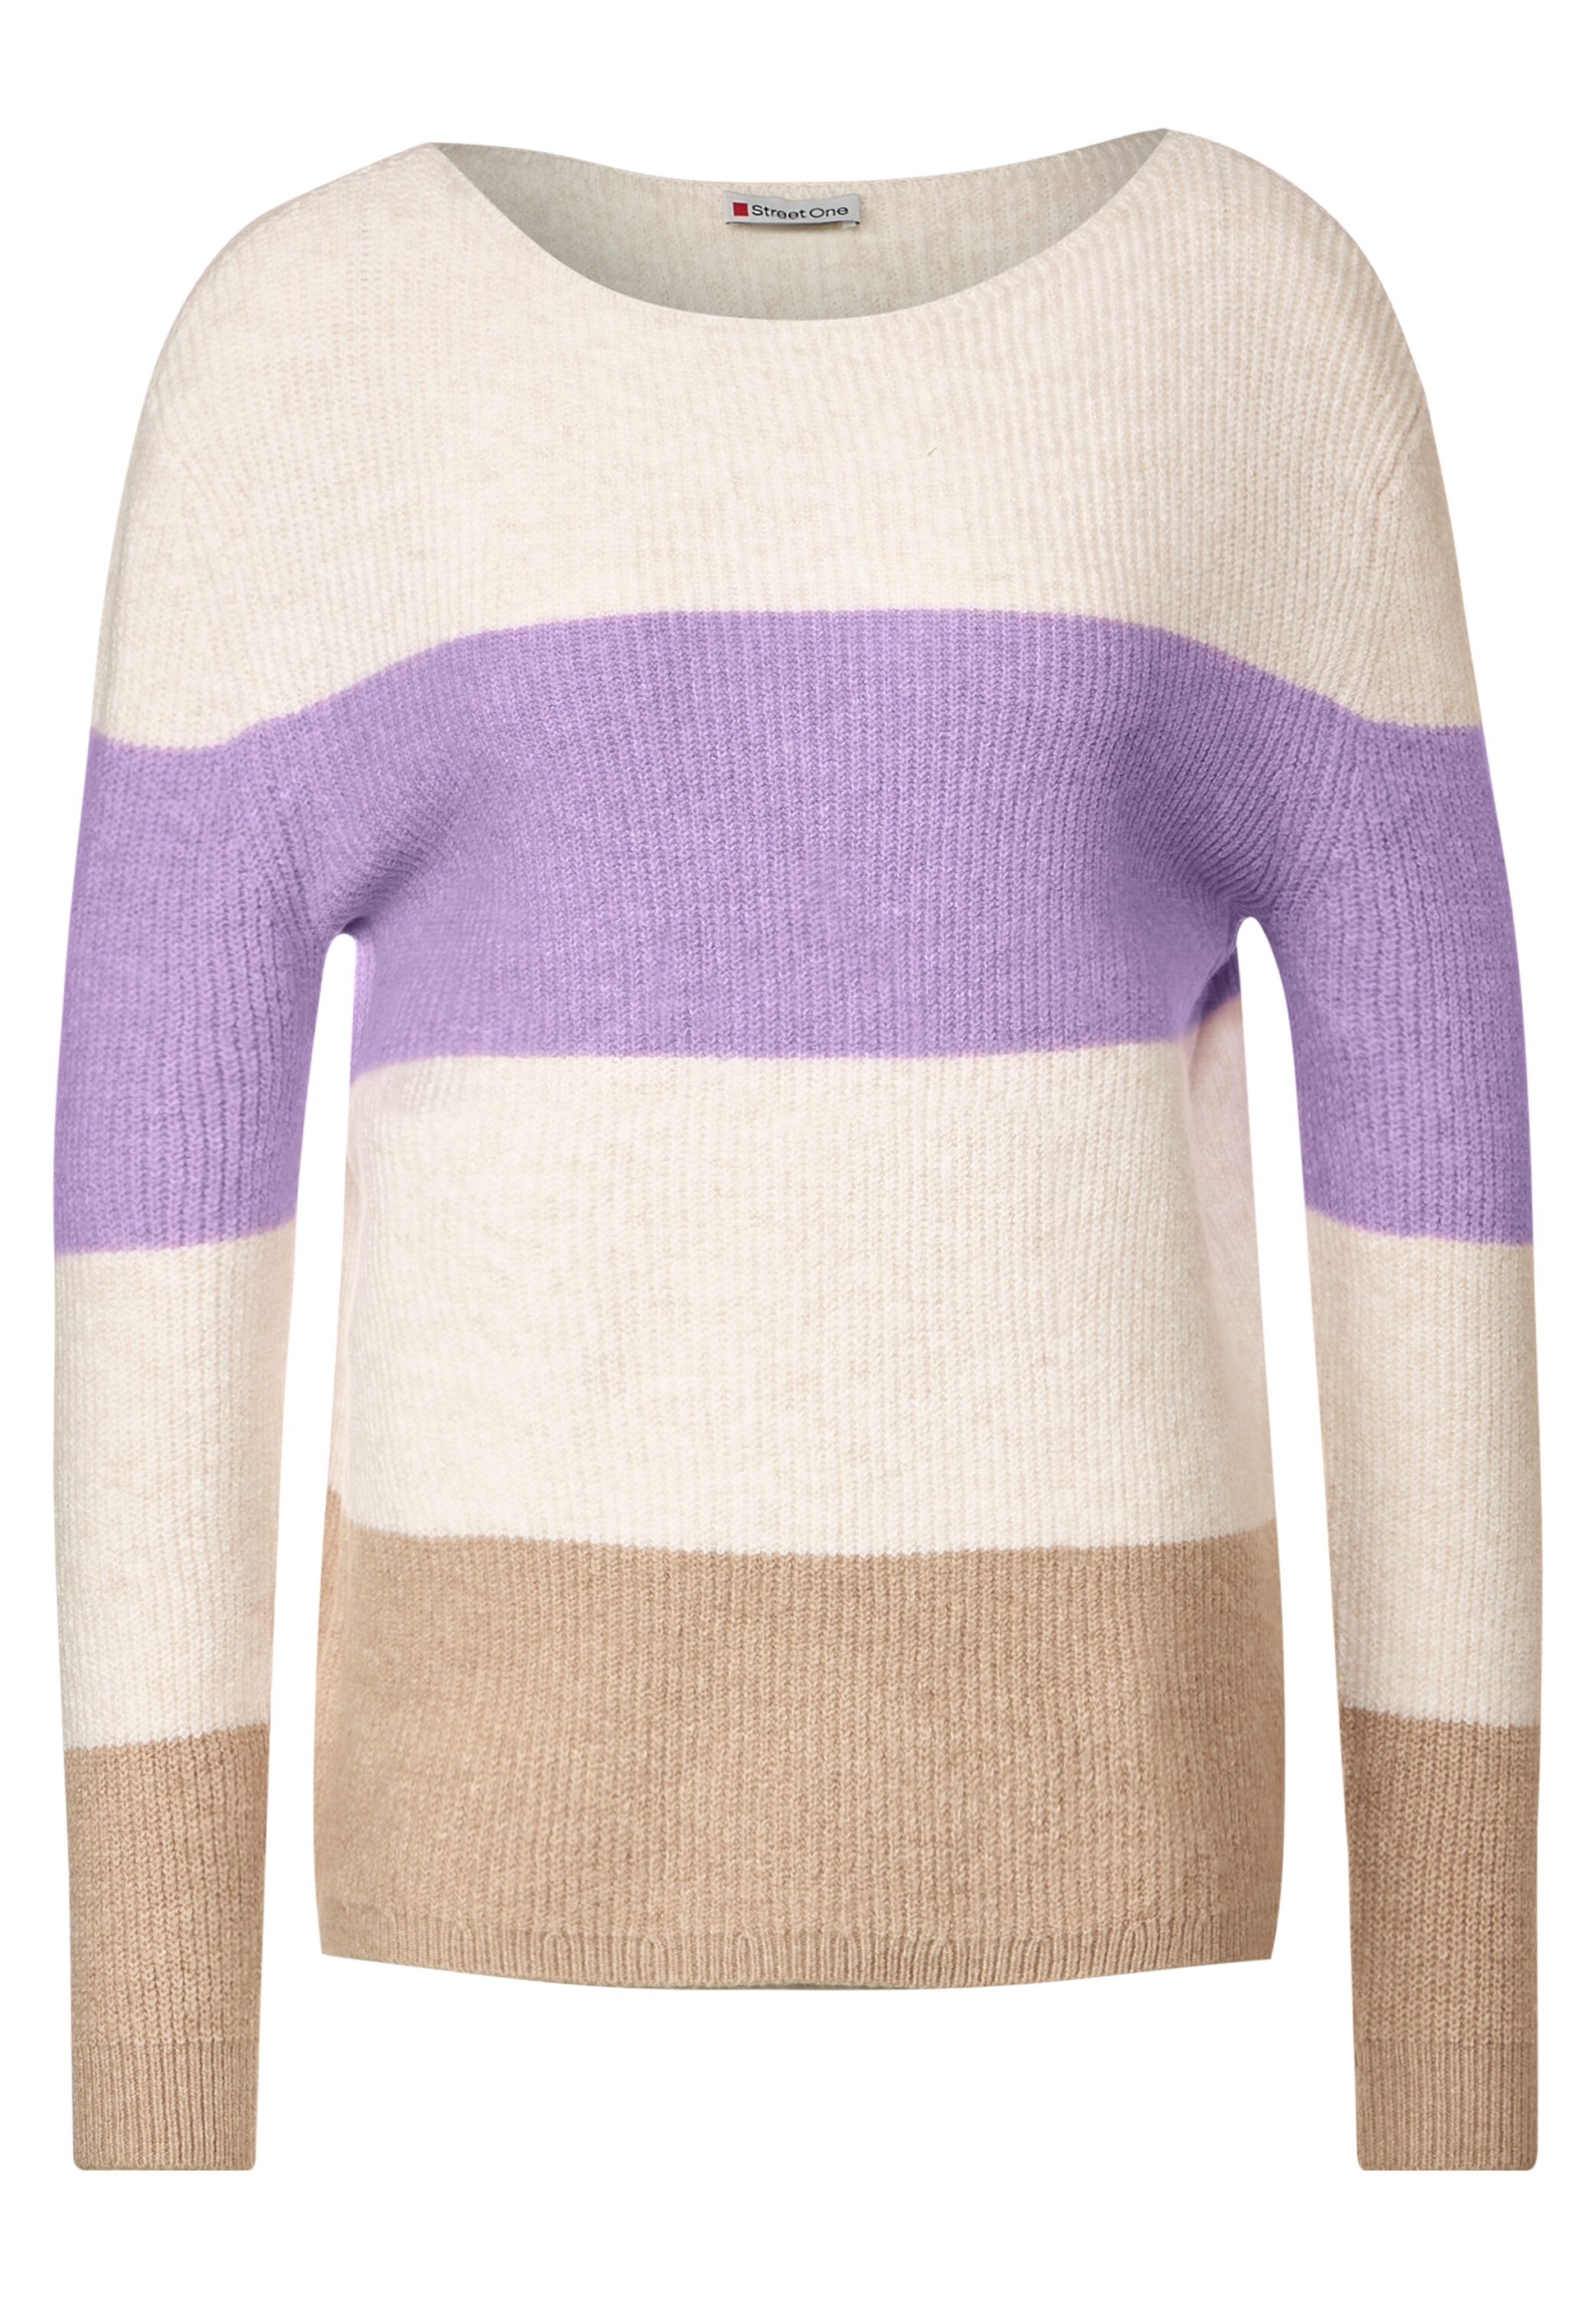 melange LTD sweater 40 | | lilac cosy A302417-35290-40 stripe QR soft pure |